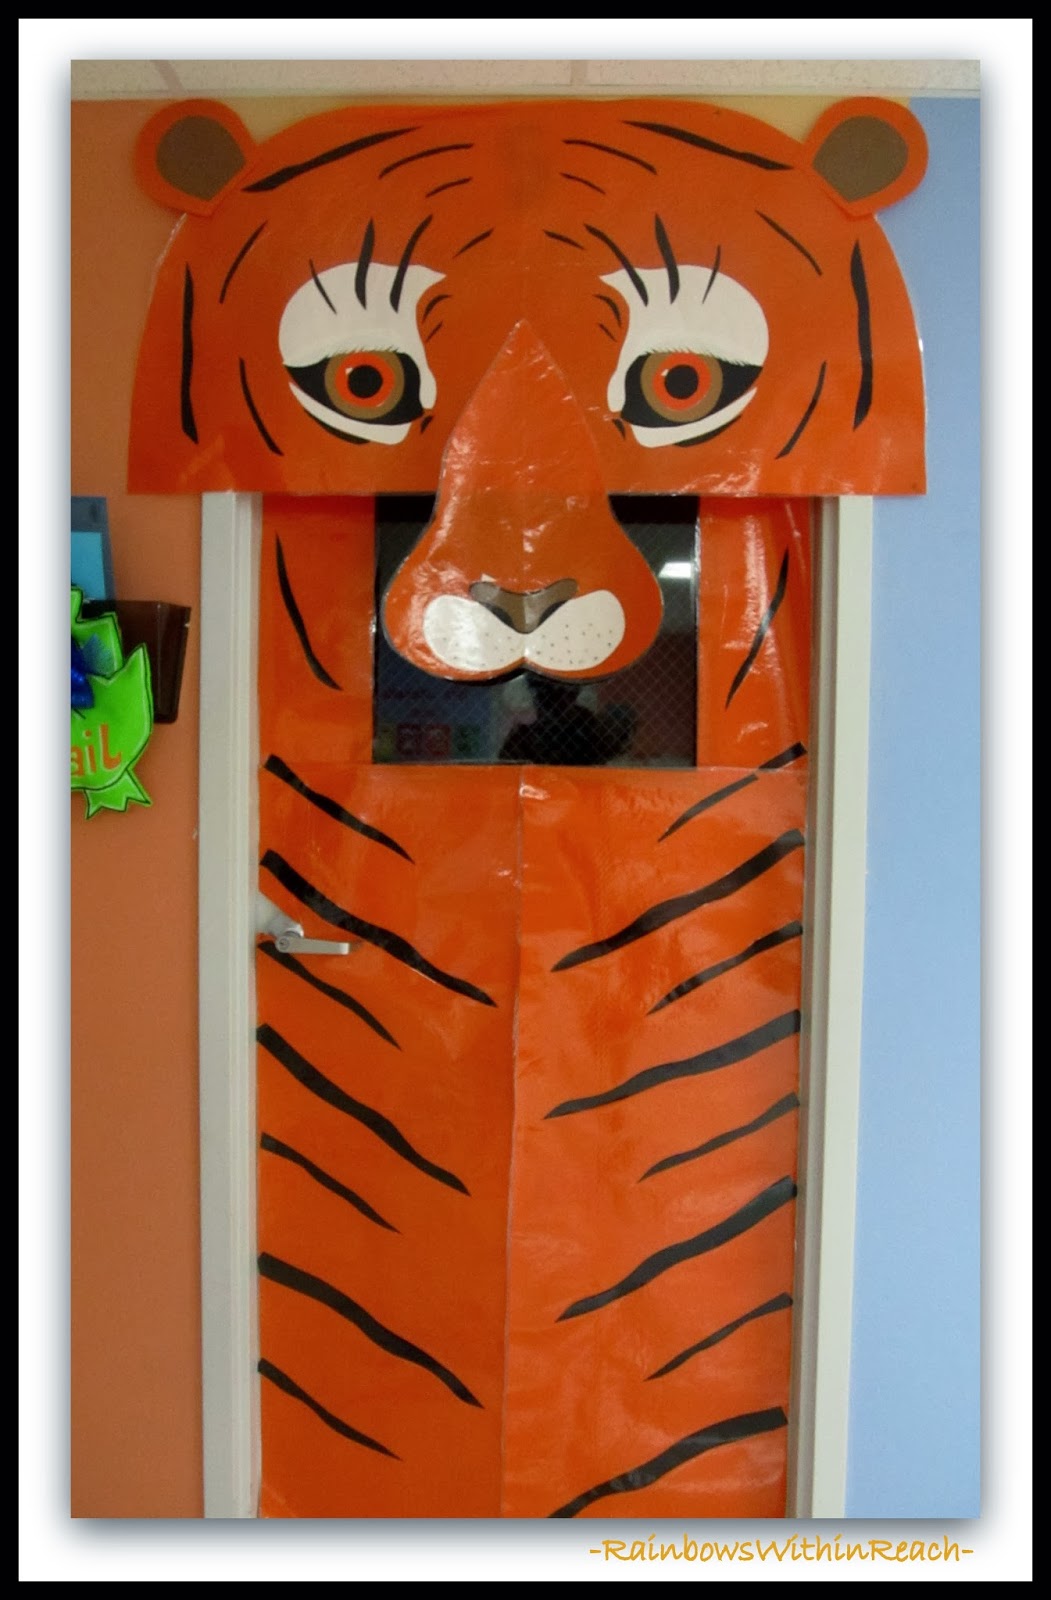 Decorated Classroom Door with Tiger Theme via RainbowsWithinReach